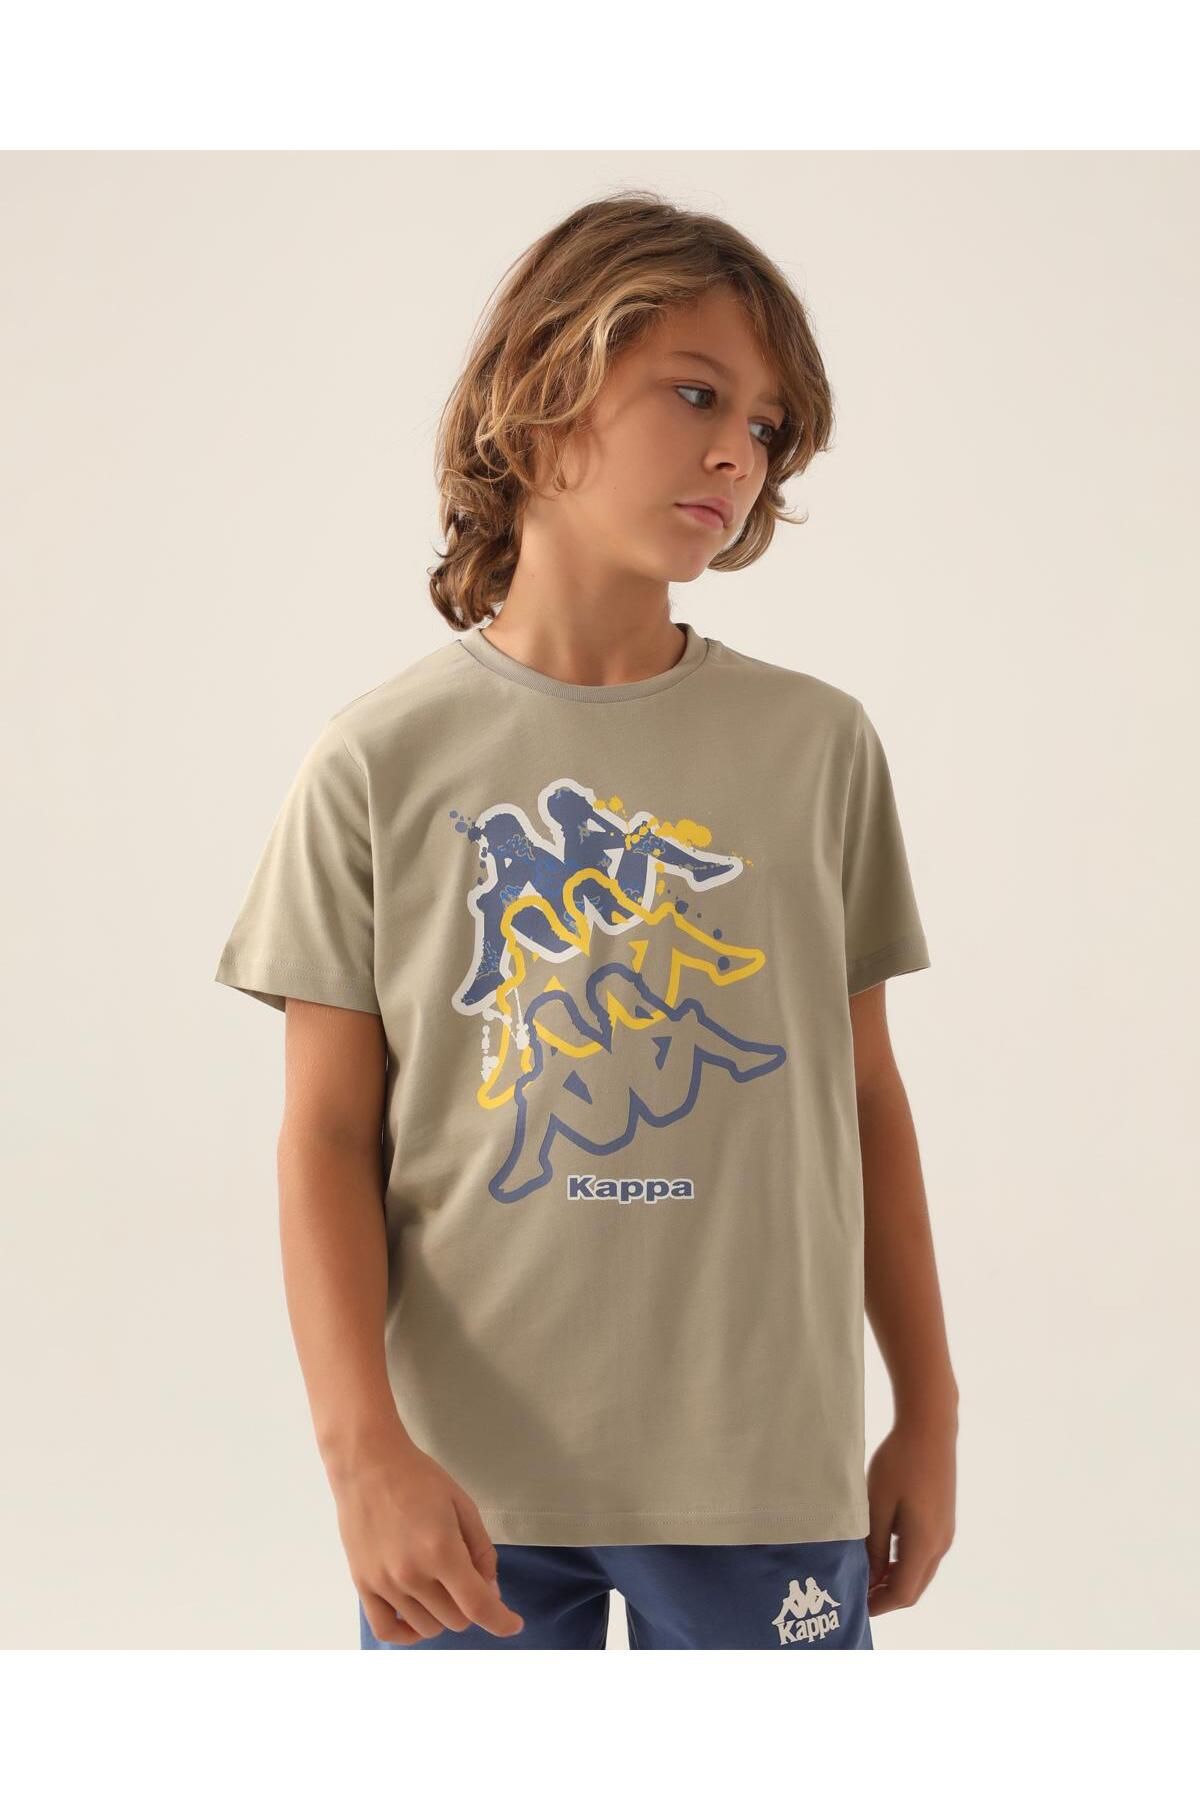 Kappa Logo Coleman Erkek Çocuk Bej Regular Fit Tişört